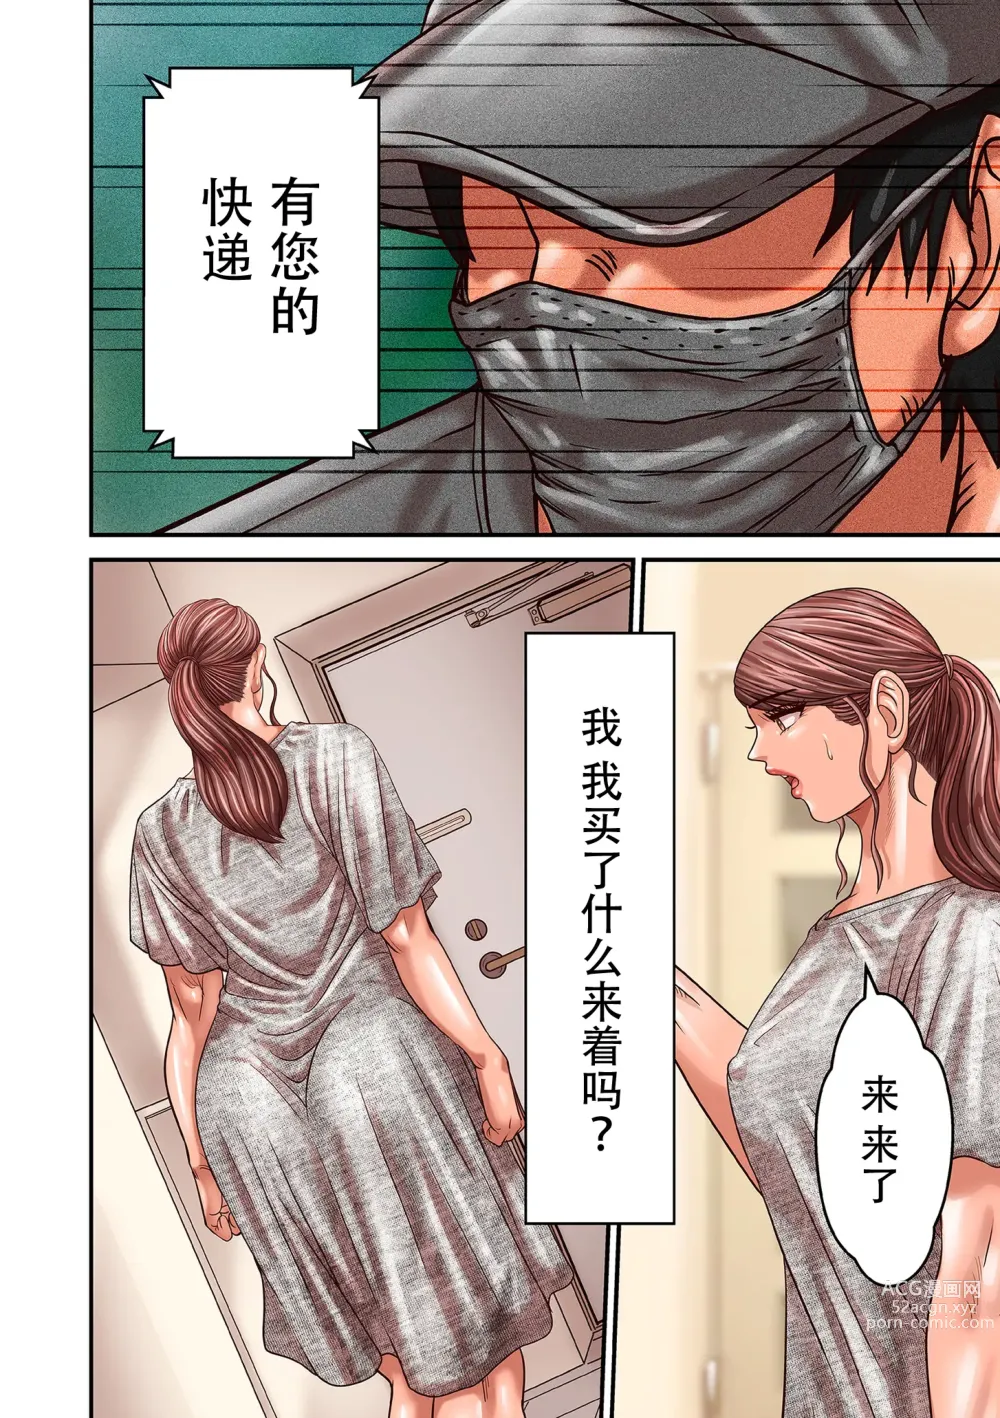 Page 34 of manga Aori Otoko 9